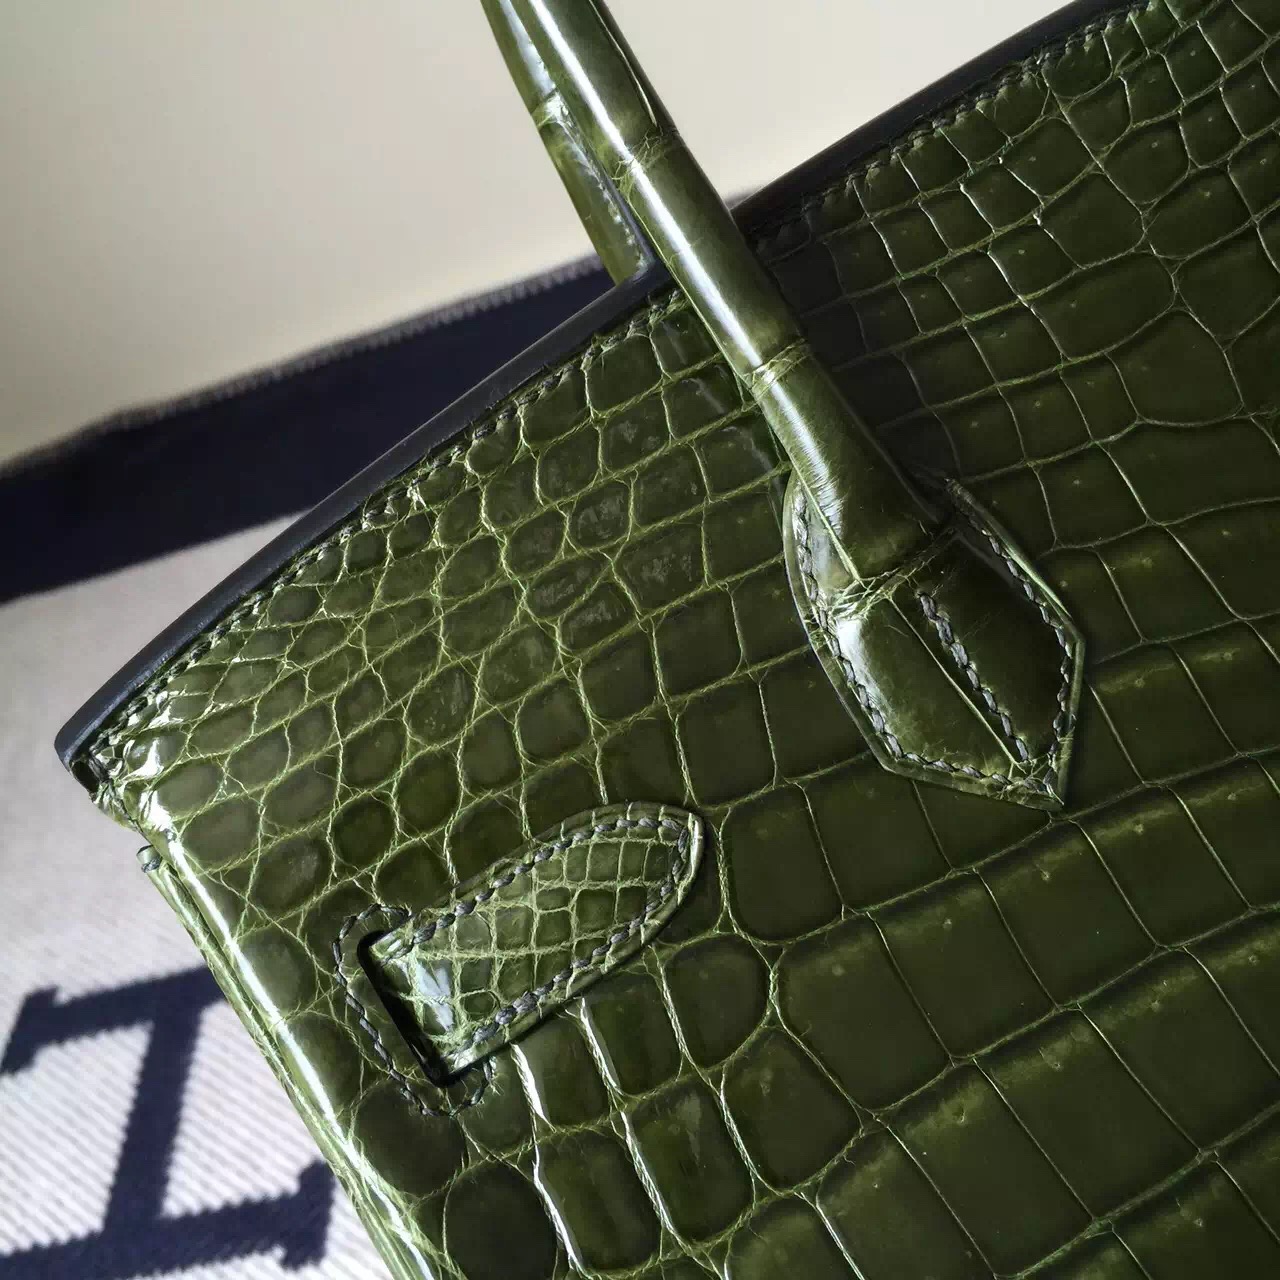 Discount Hermes 6H Olive Green Crocodile Shiny Leather Birkin Bag 30cm